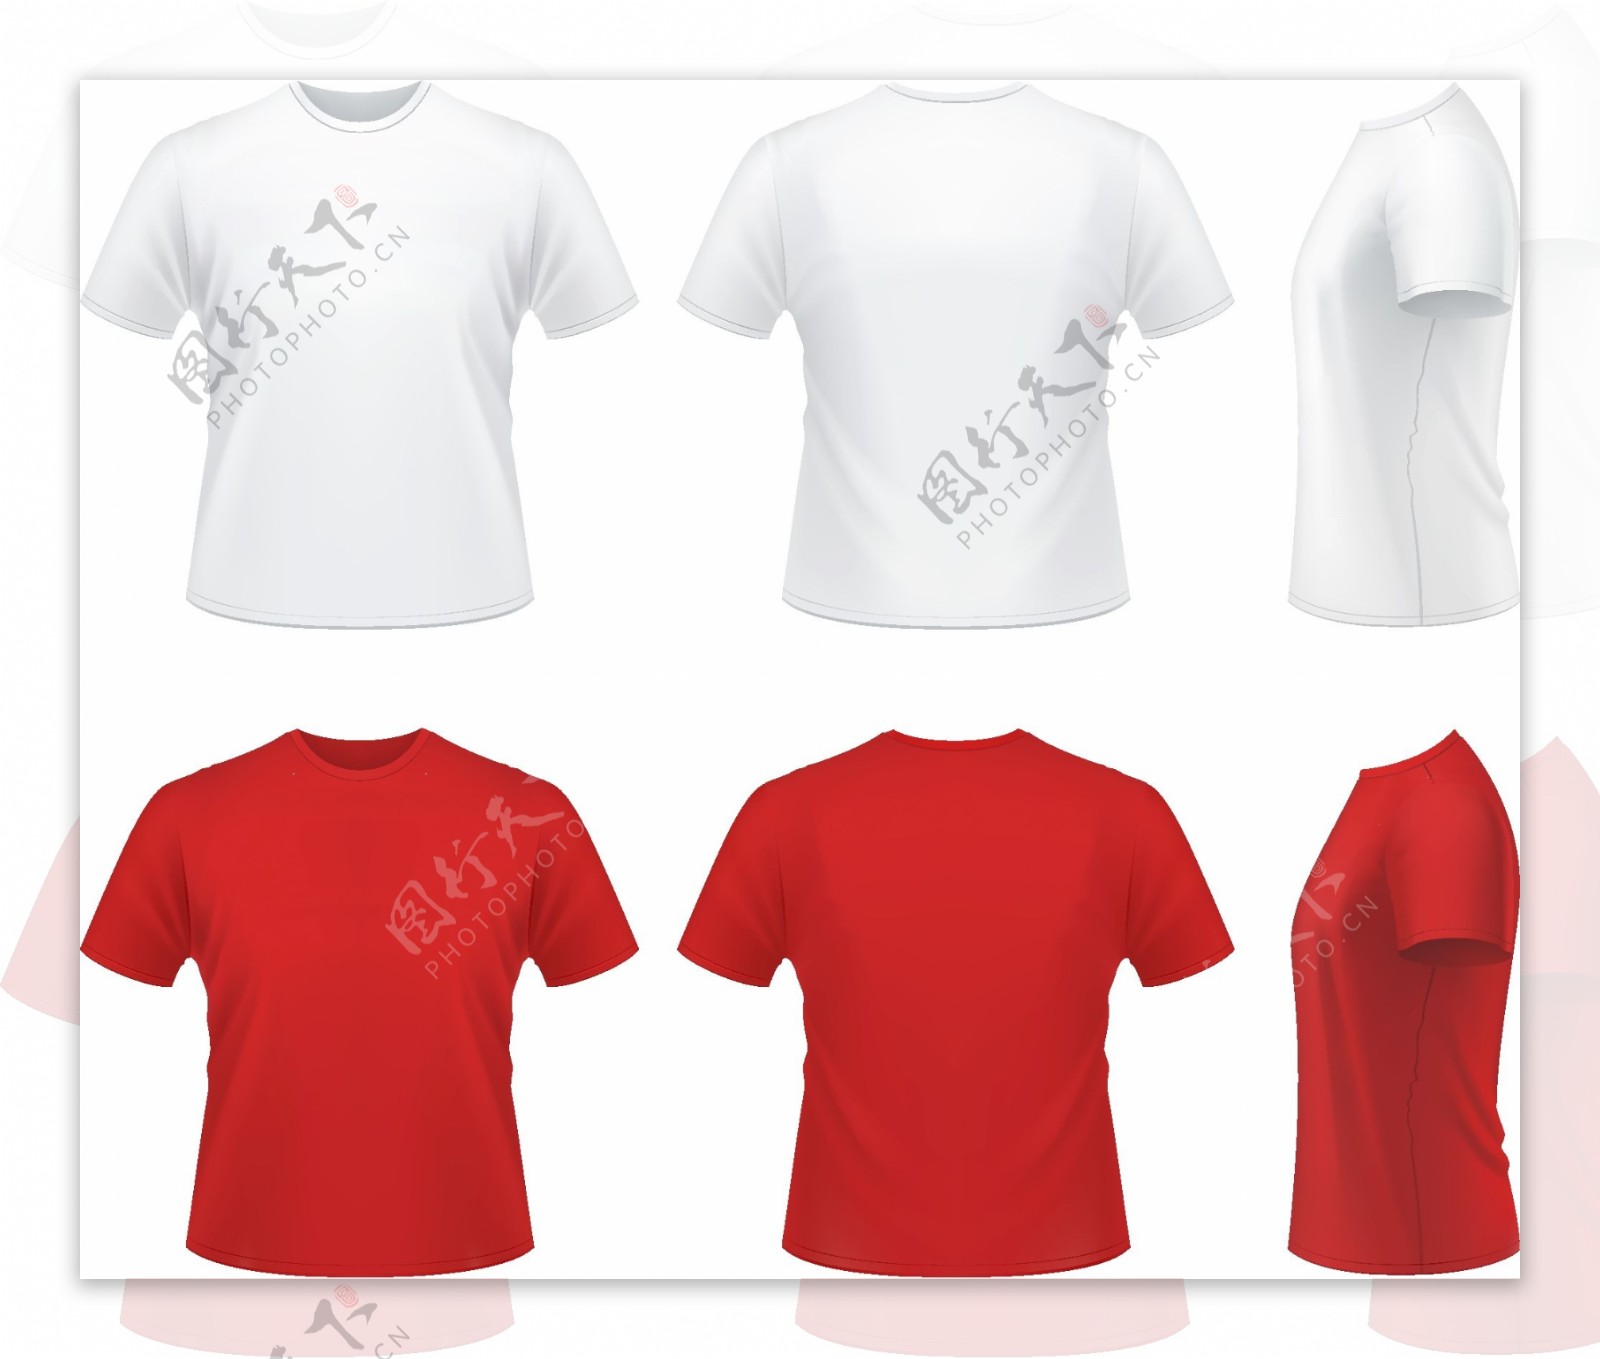 红色和白色tshirt矢量素材